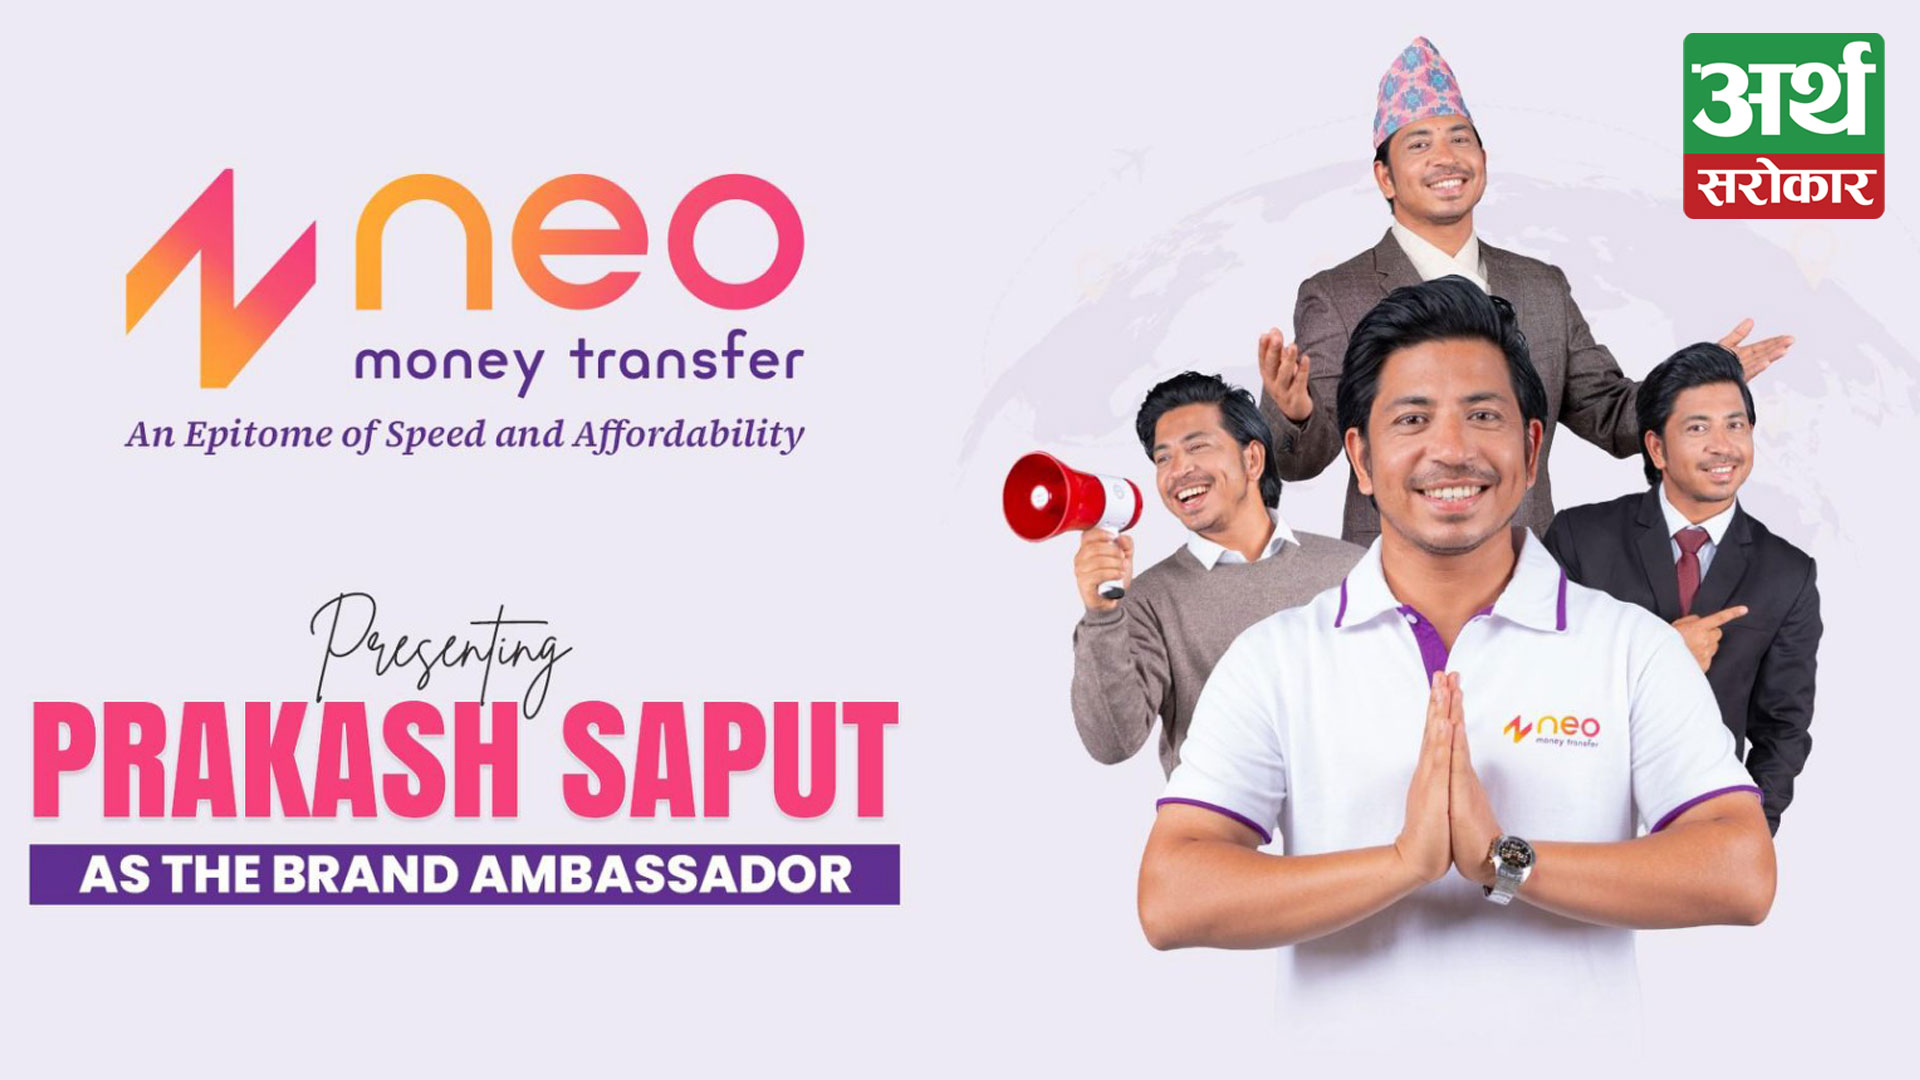 Neo Money Transfer appoints Prakash Saput as their brand ambassador